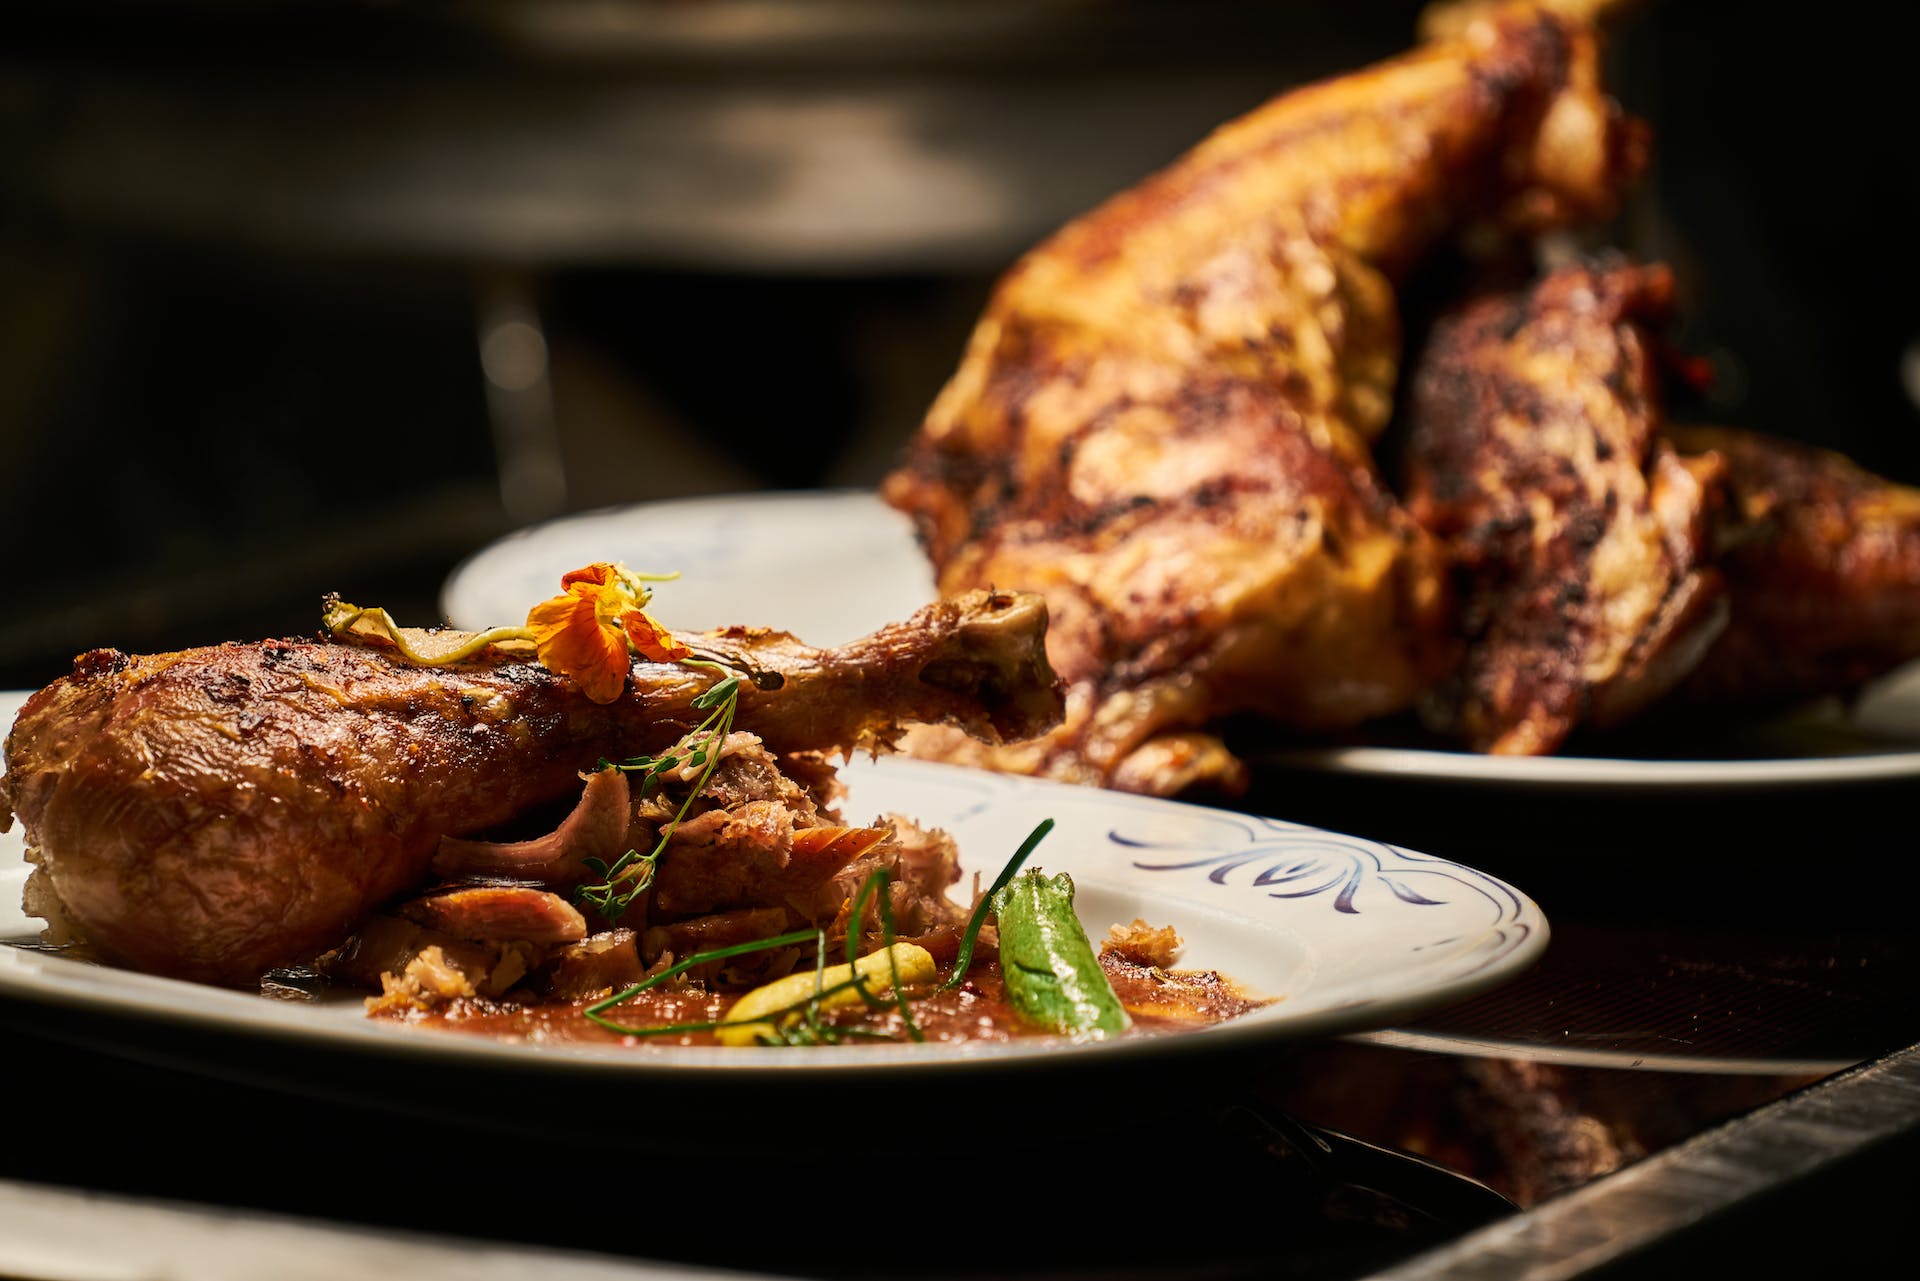 Roast chicken on plates | Source: Pexels